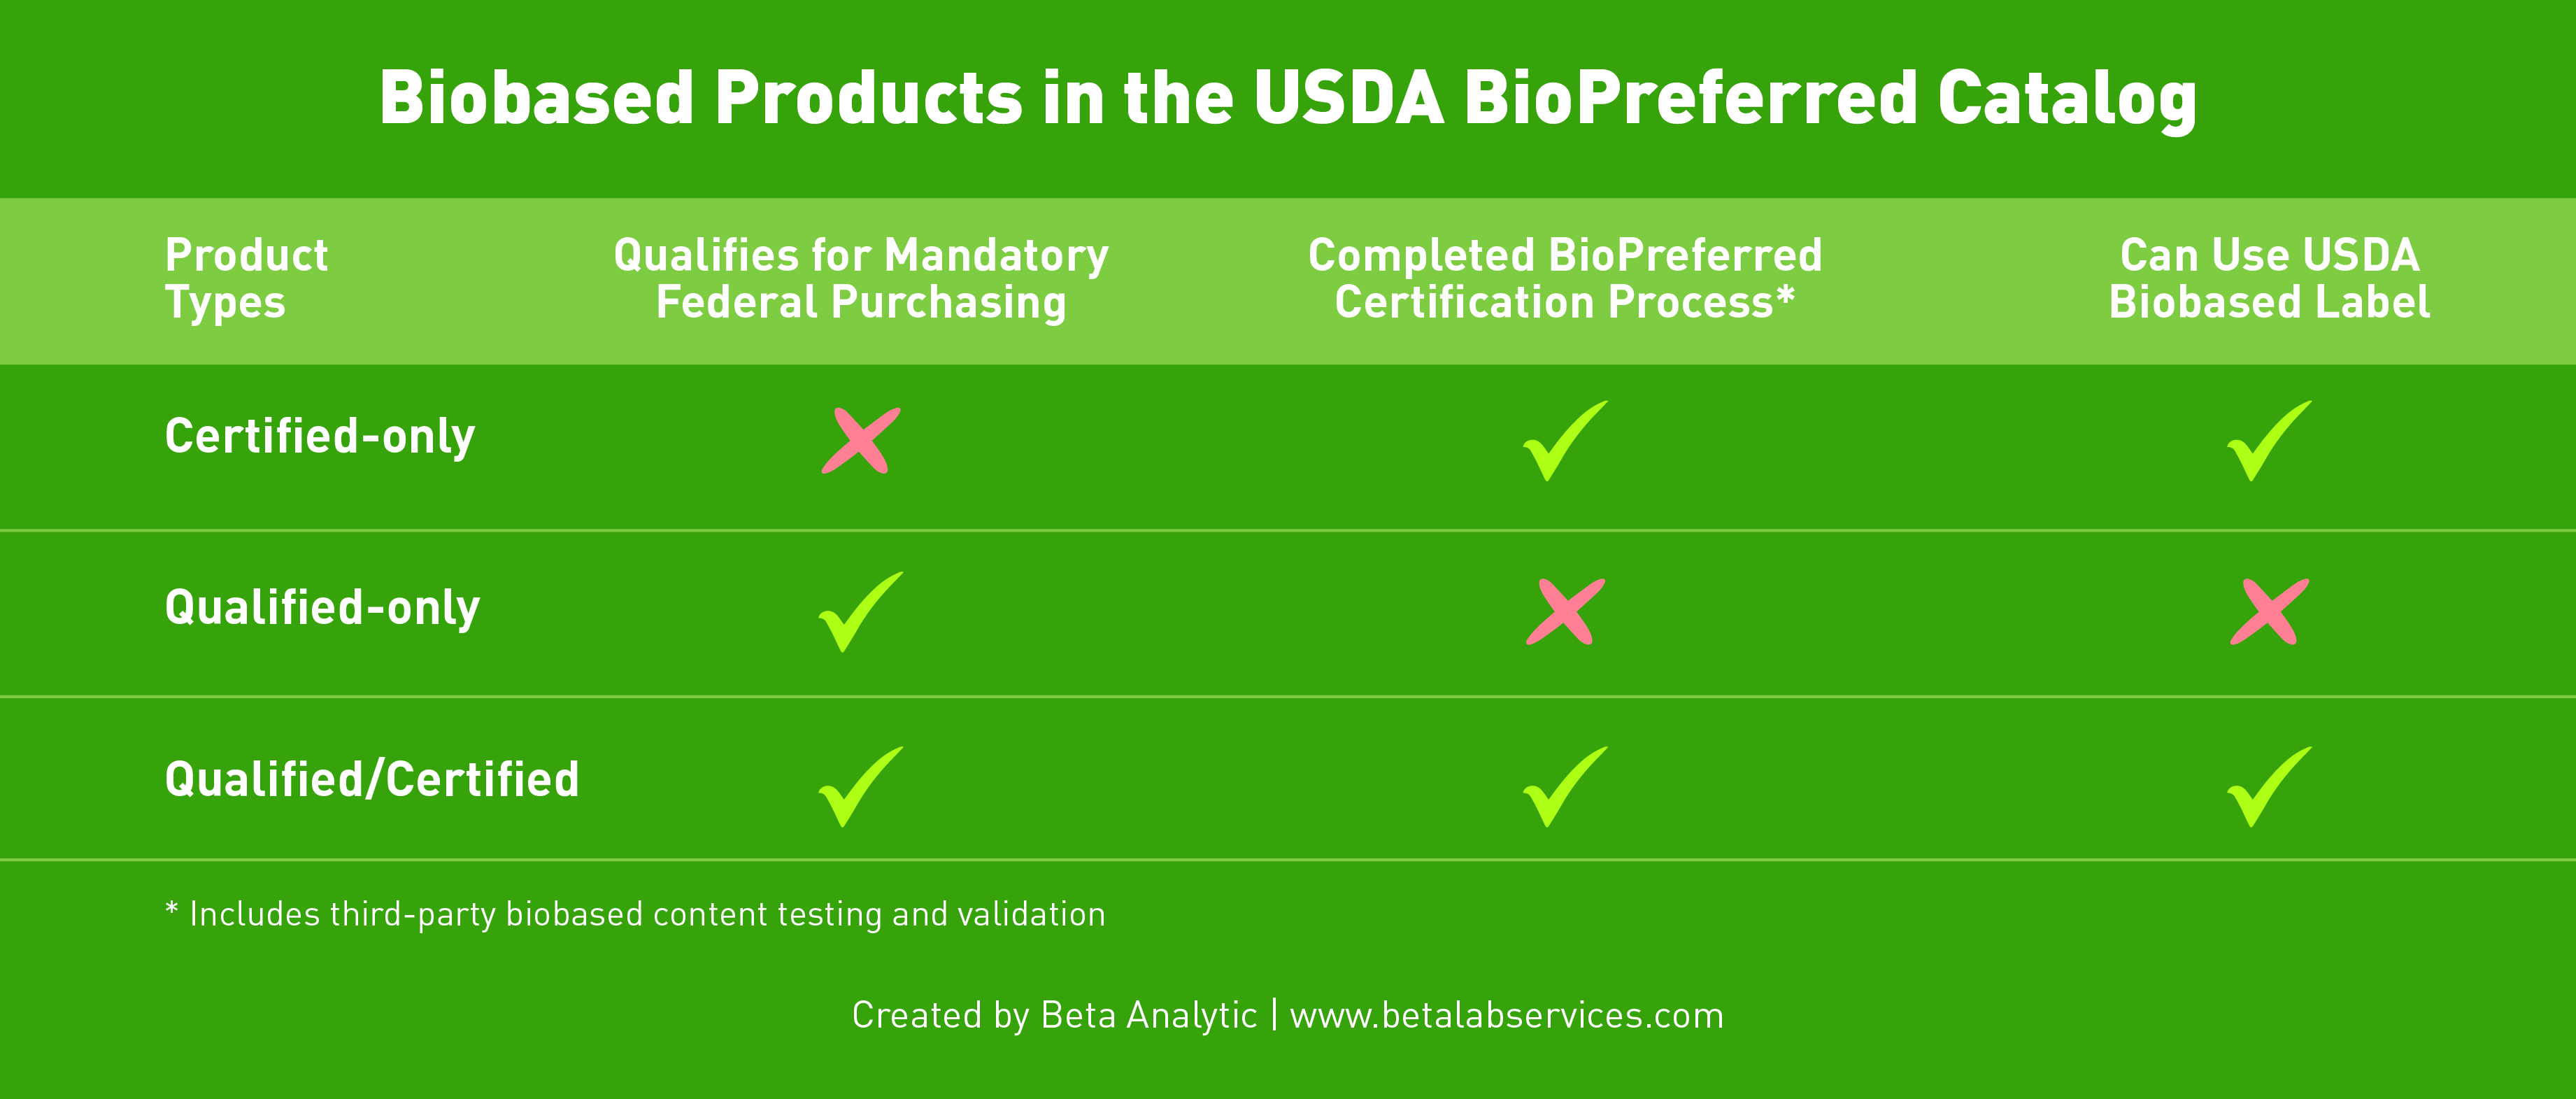 Biobased products in the USDA BioPreferred Program catalog